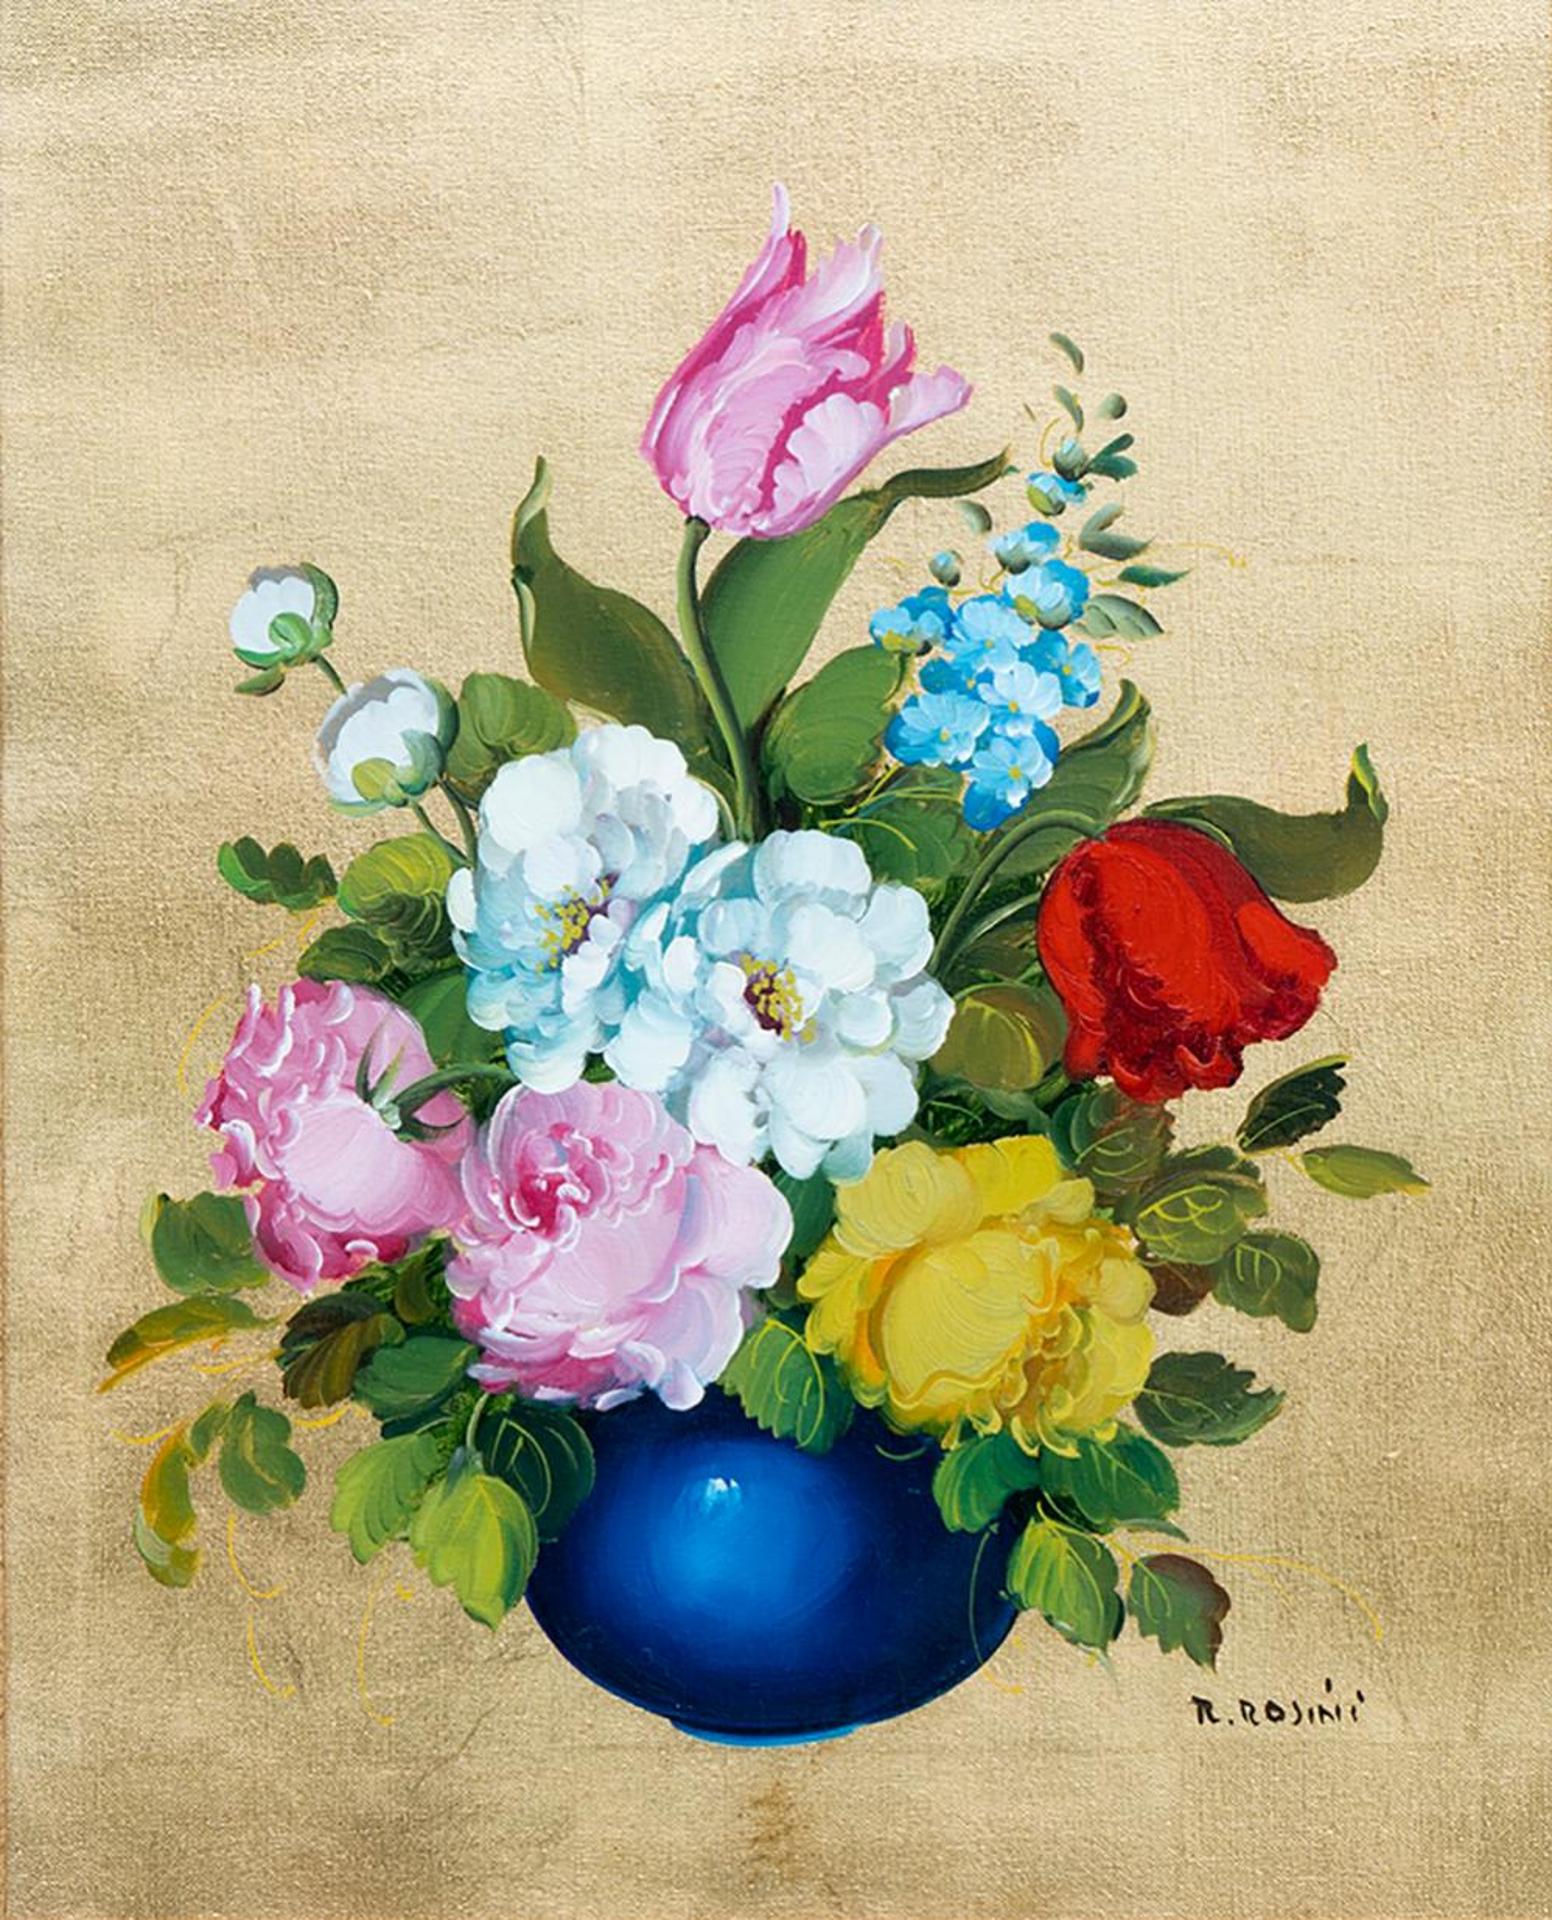 R. Rosini (1924) - eUntitled - Flowers in a Blue Vaseâ